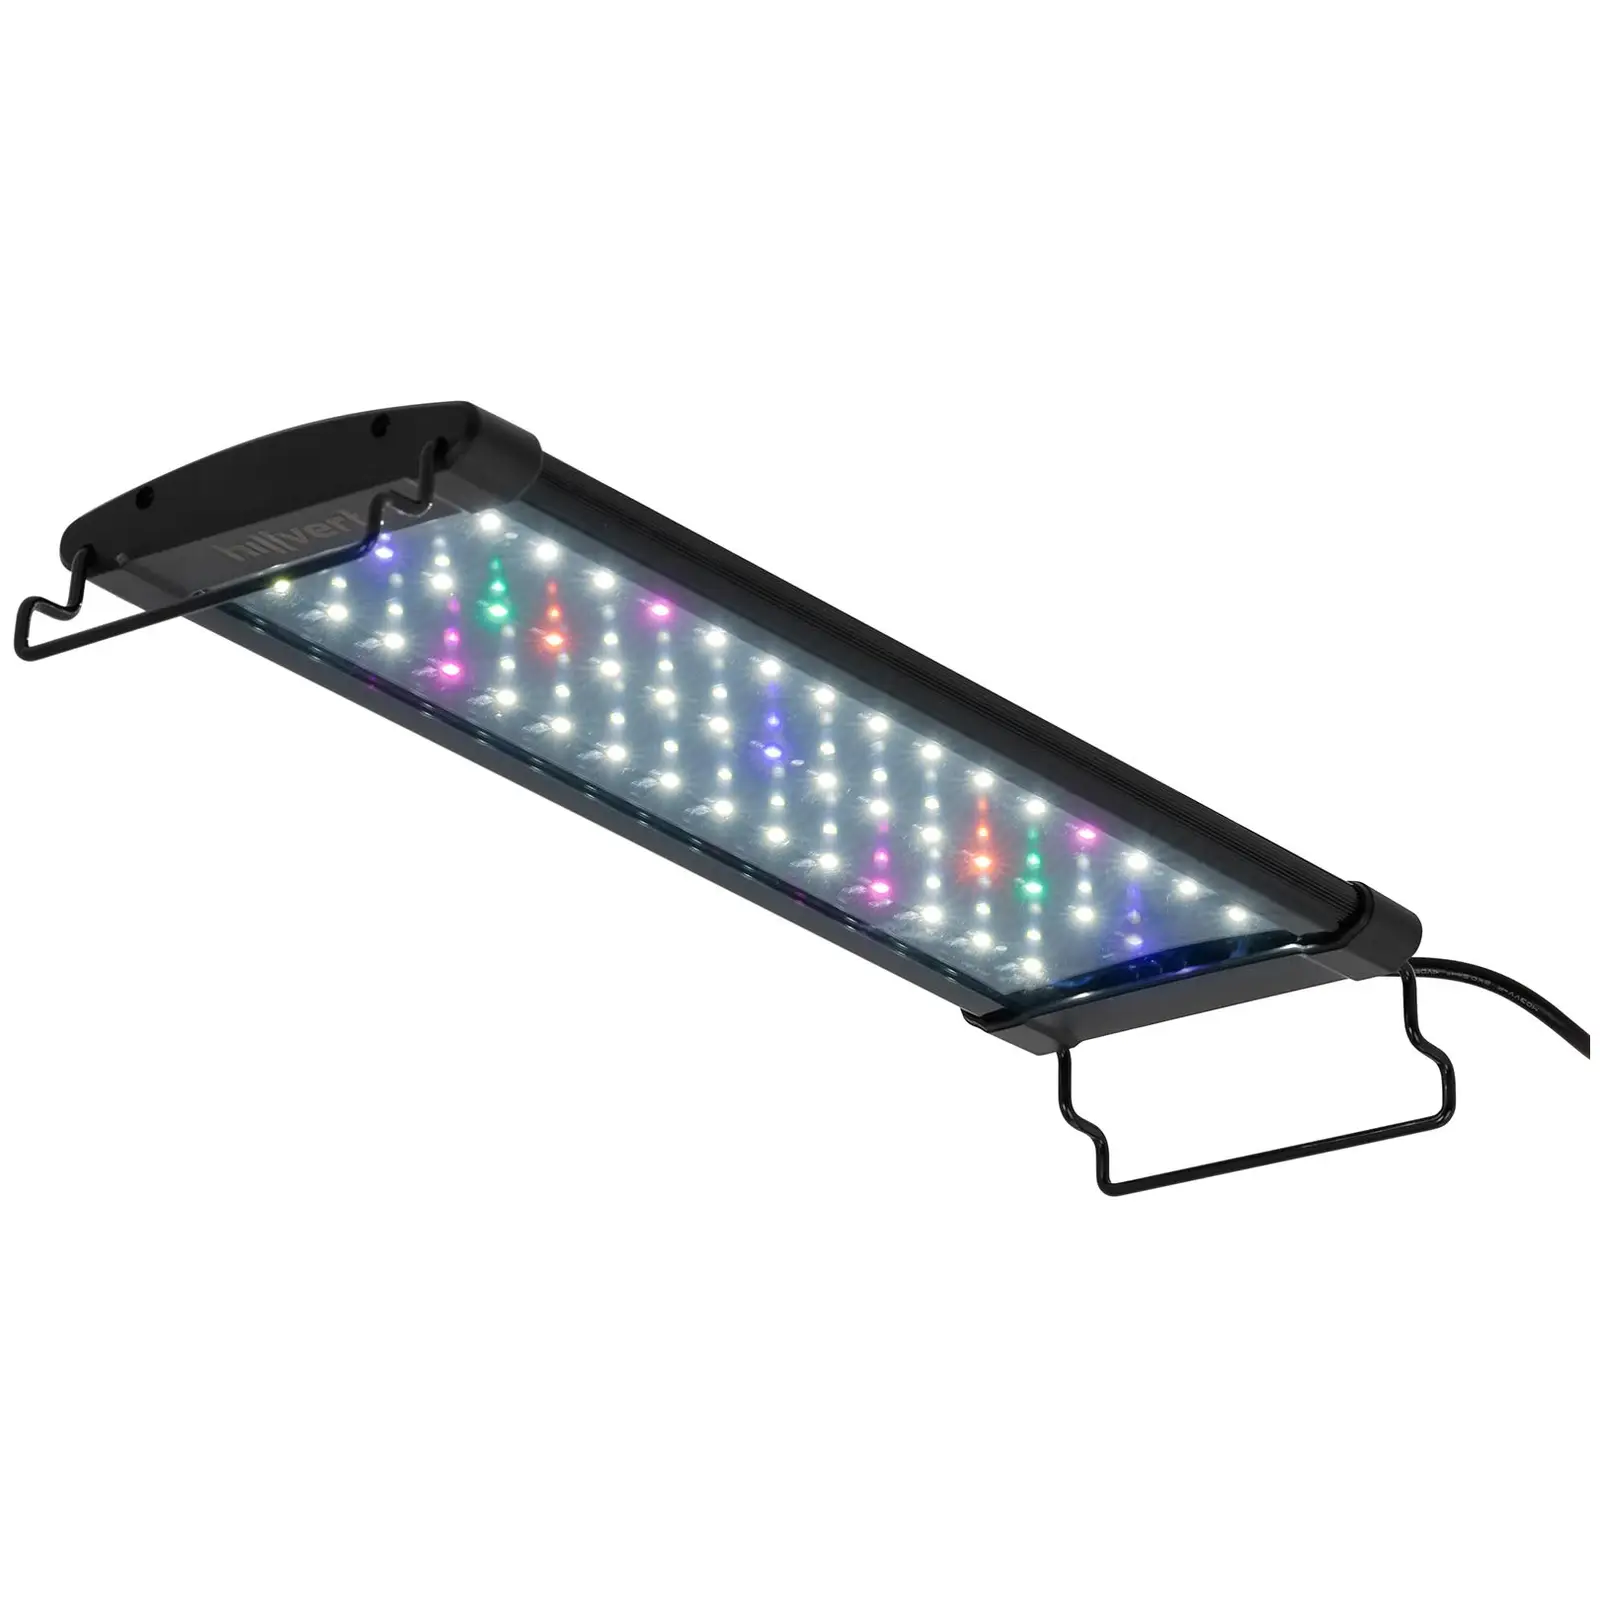 Lampa LED do akwarium - 45 diod LED - 12 W - 36 cm